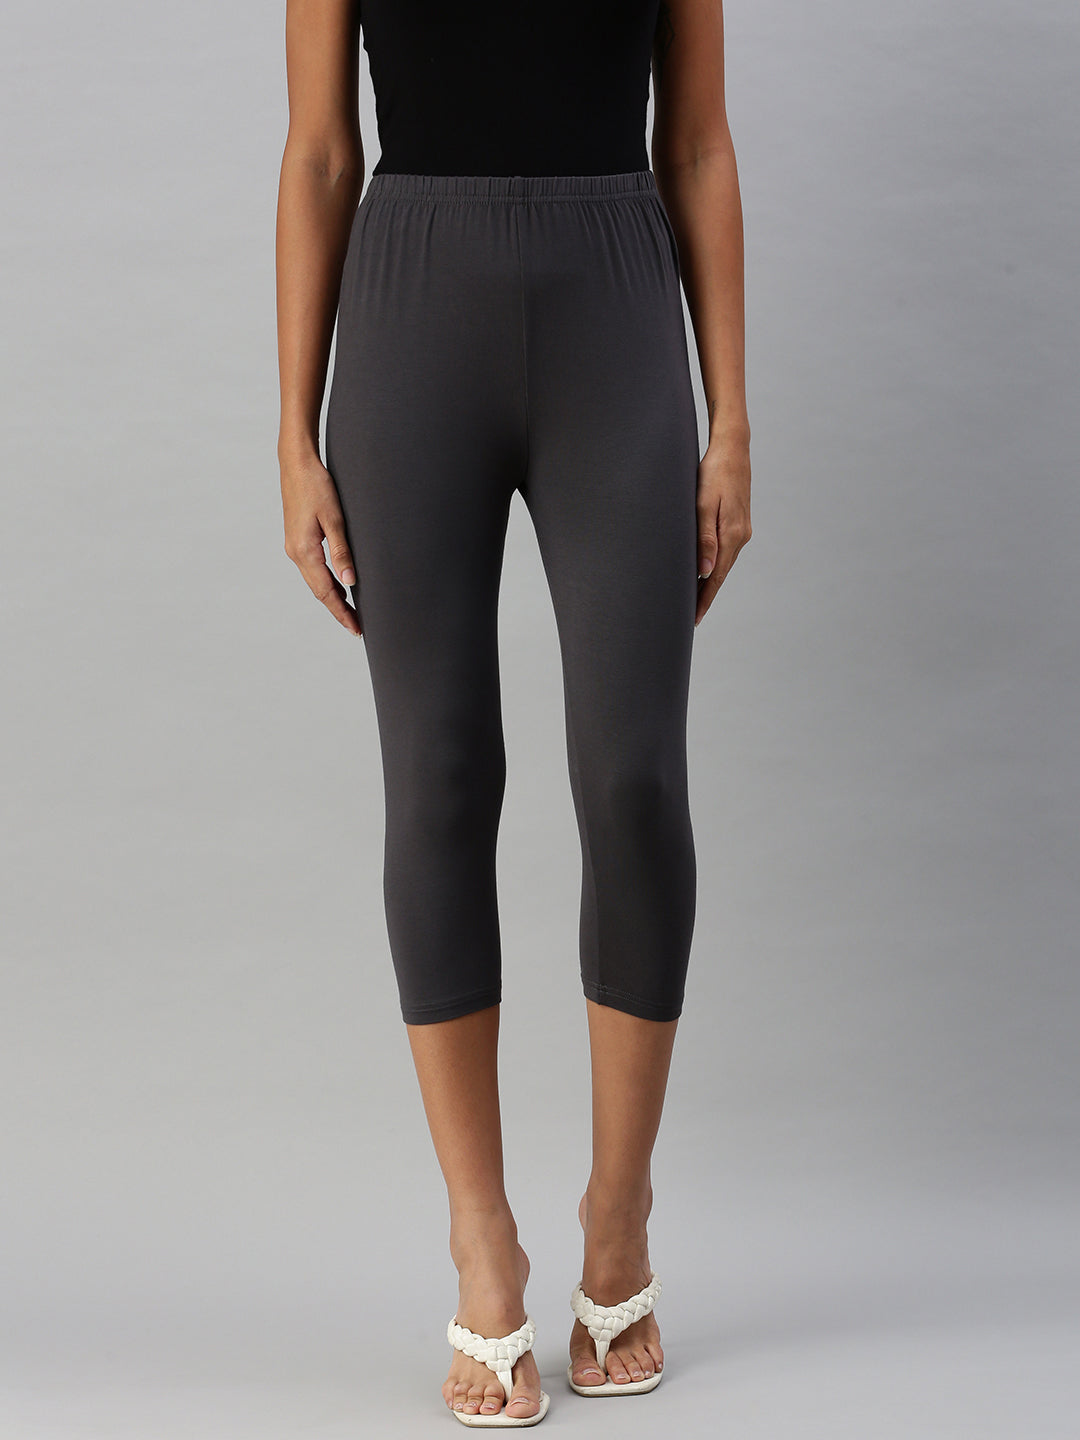 Shop Prisma's Slate Capri Leggings for Comfortable and Stylish Workout Wear